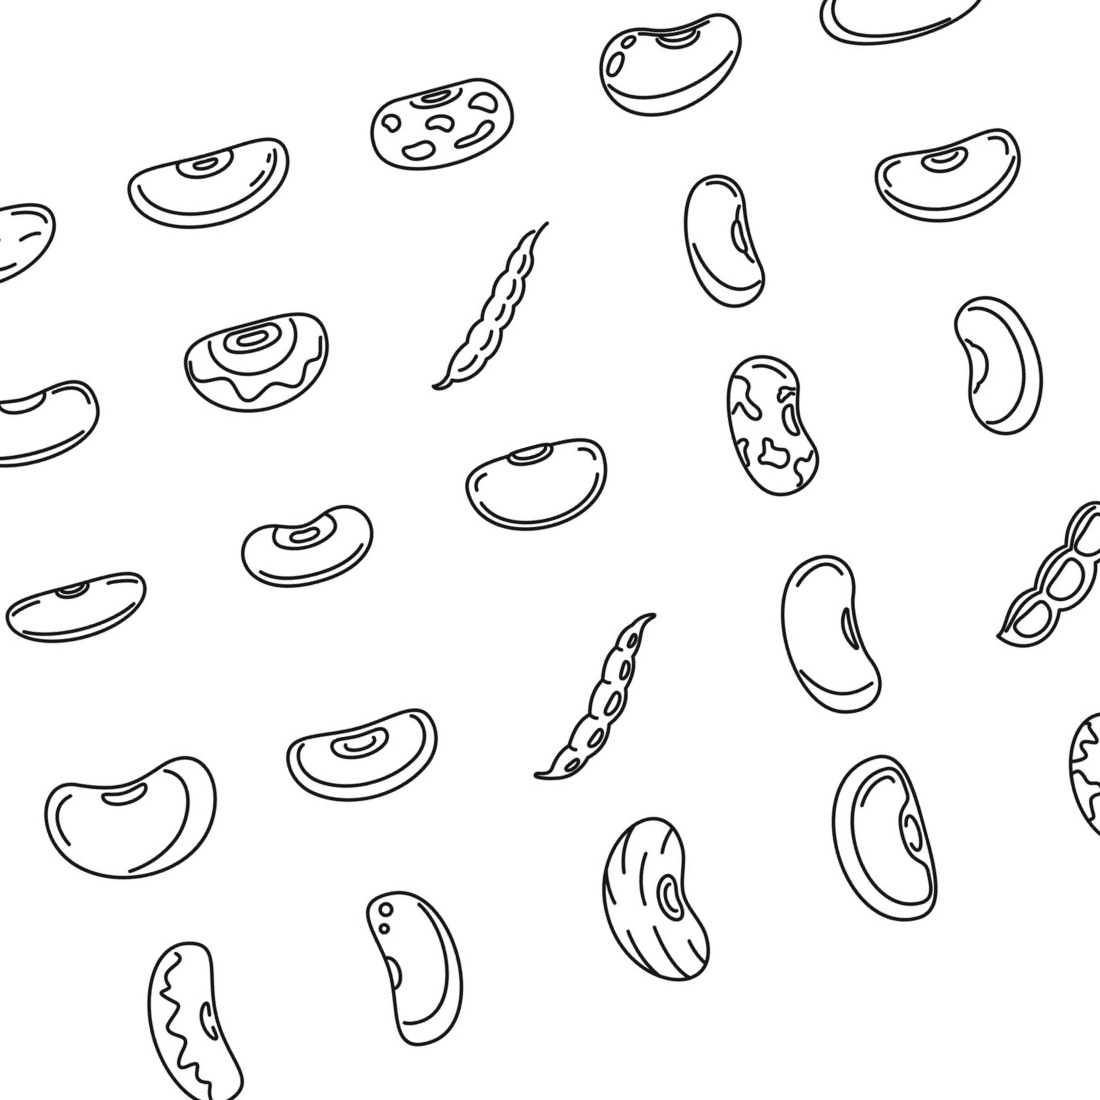 Prints of legume kidney bean icons set.